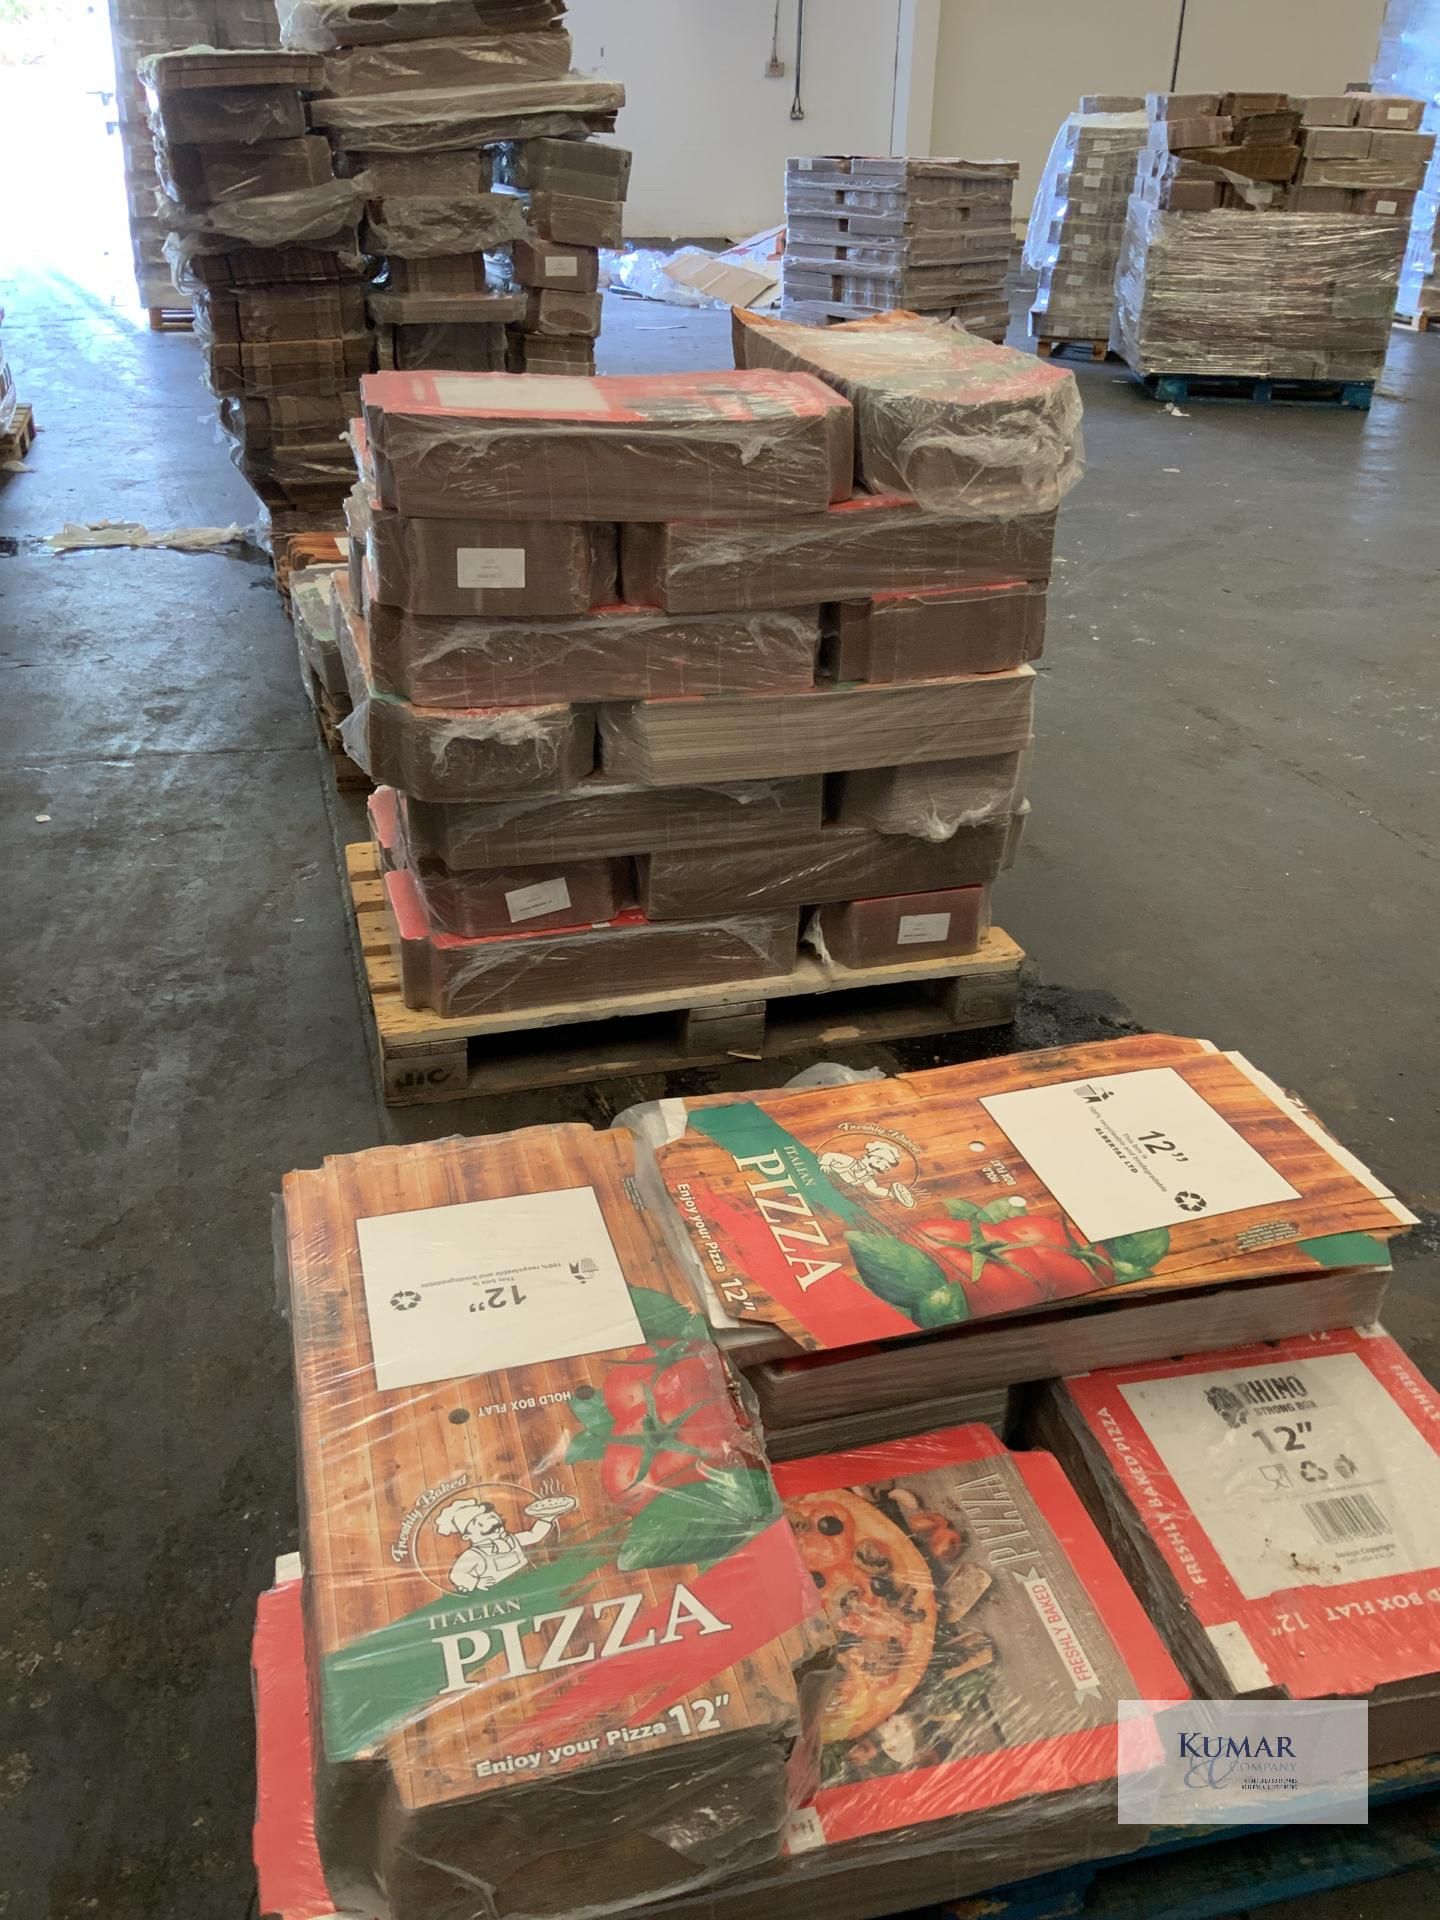 Circa 6,000 Mixed Size Pizza Boxes - RRP £1900